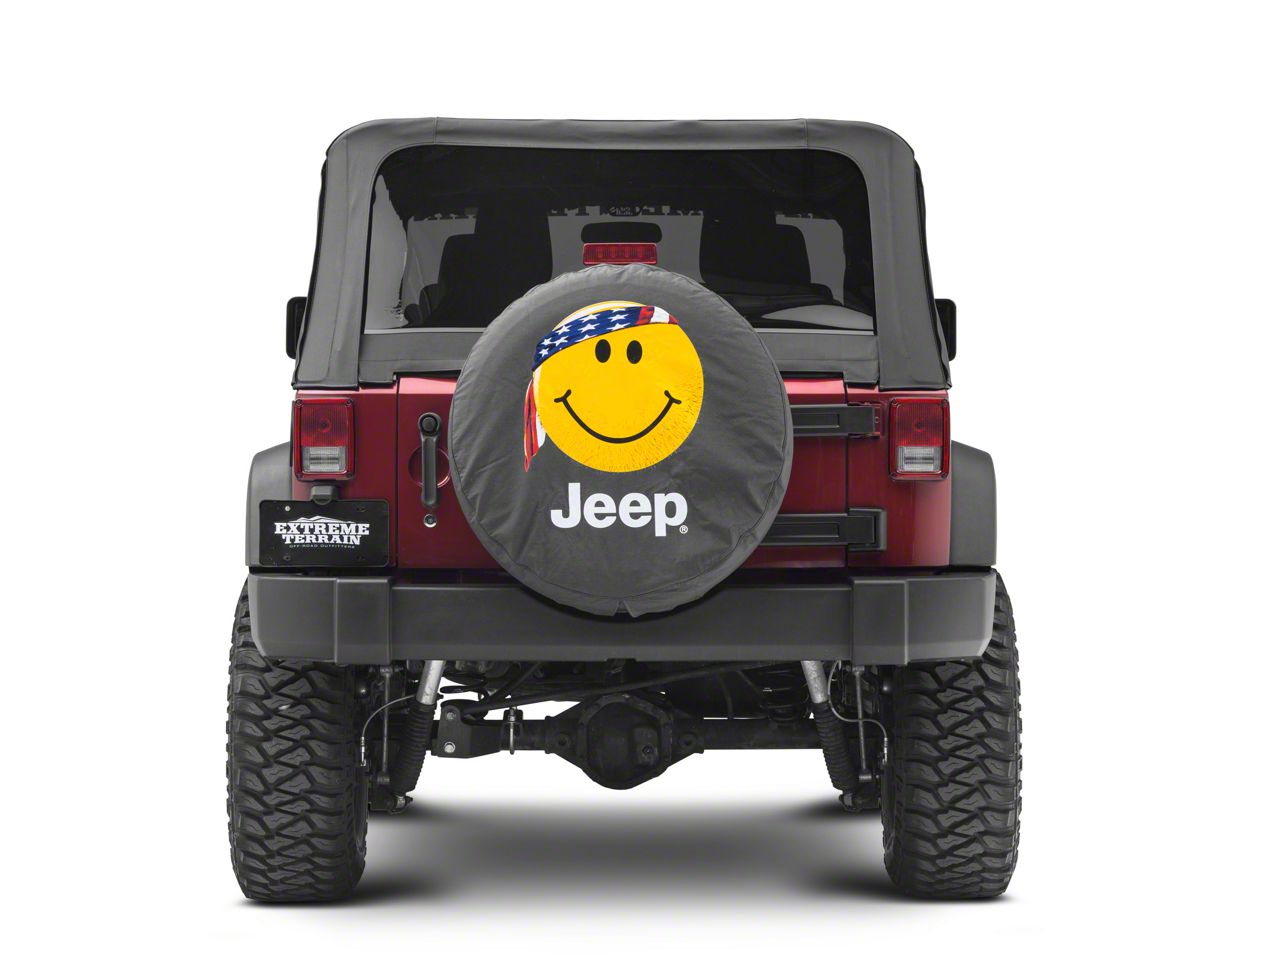 Mopar Jeep Wrangler Smiley Face with Bandana Jeep Spare Tire Cover J129632 (66-18  Jeep CJ5, CJ7, Wrangler YJ, TJ  JK) Free Shipping